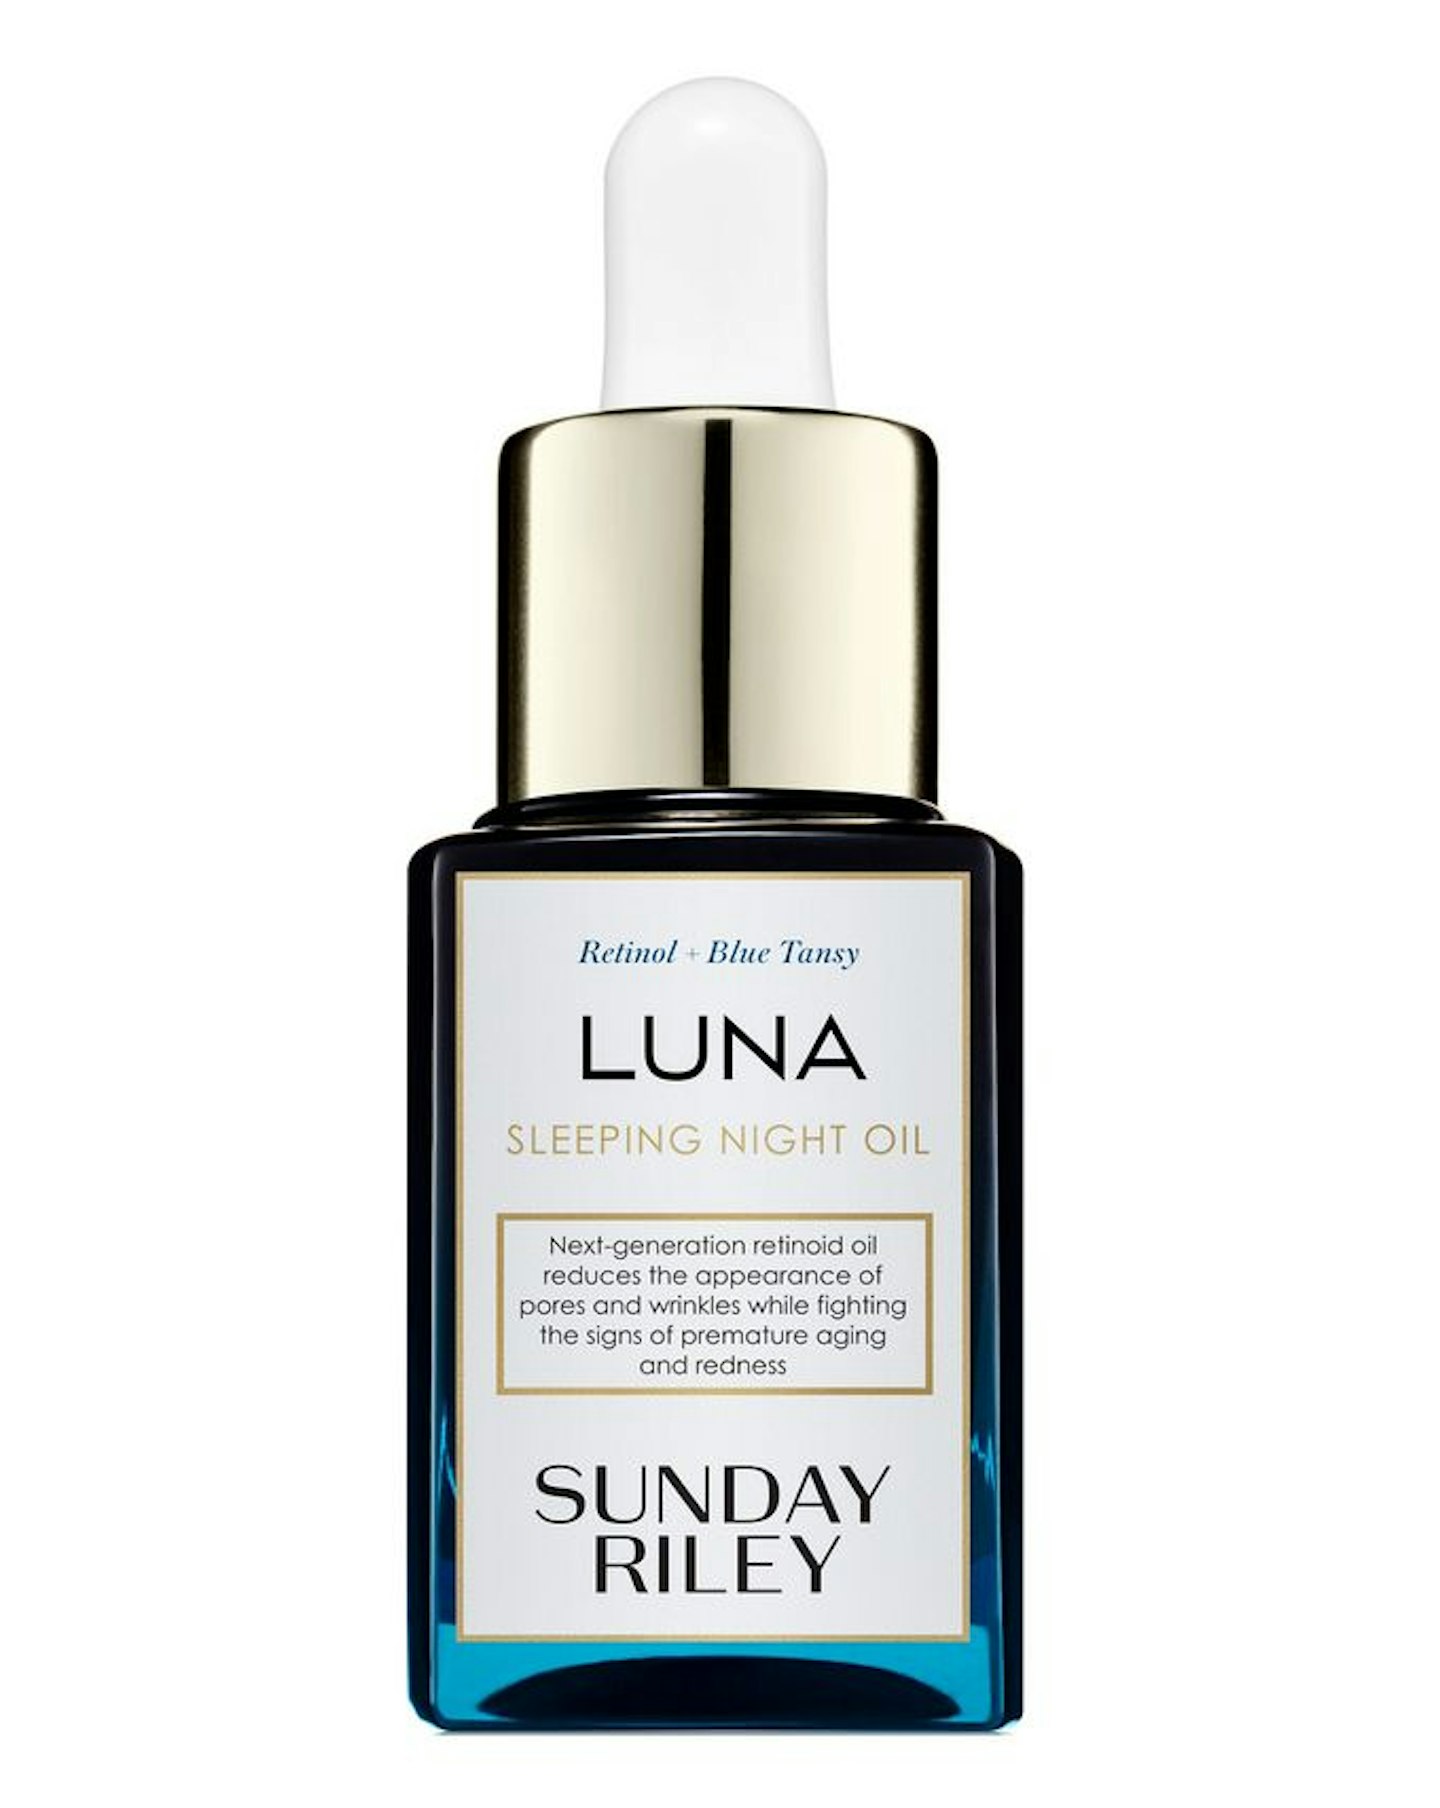 Sunday Riley Luna Sleeping Night Oil, £45